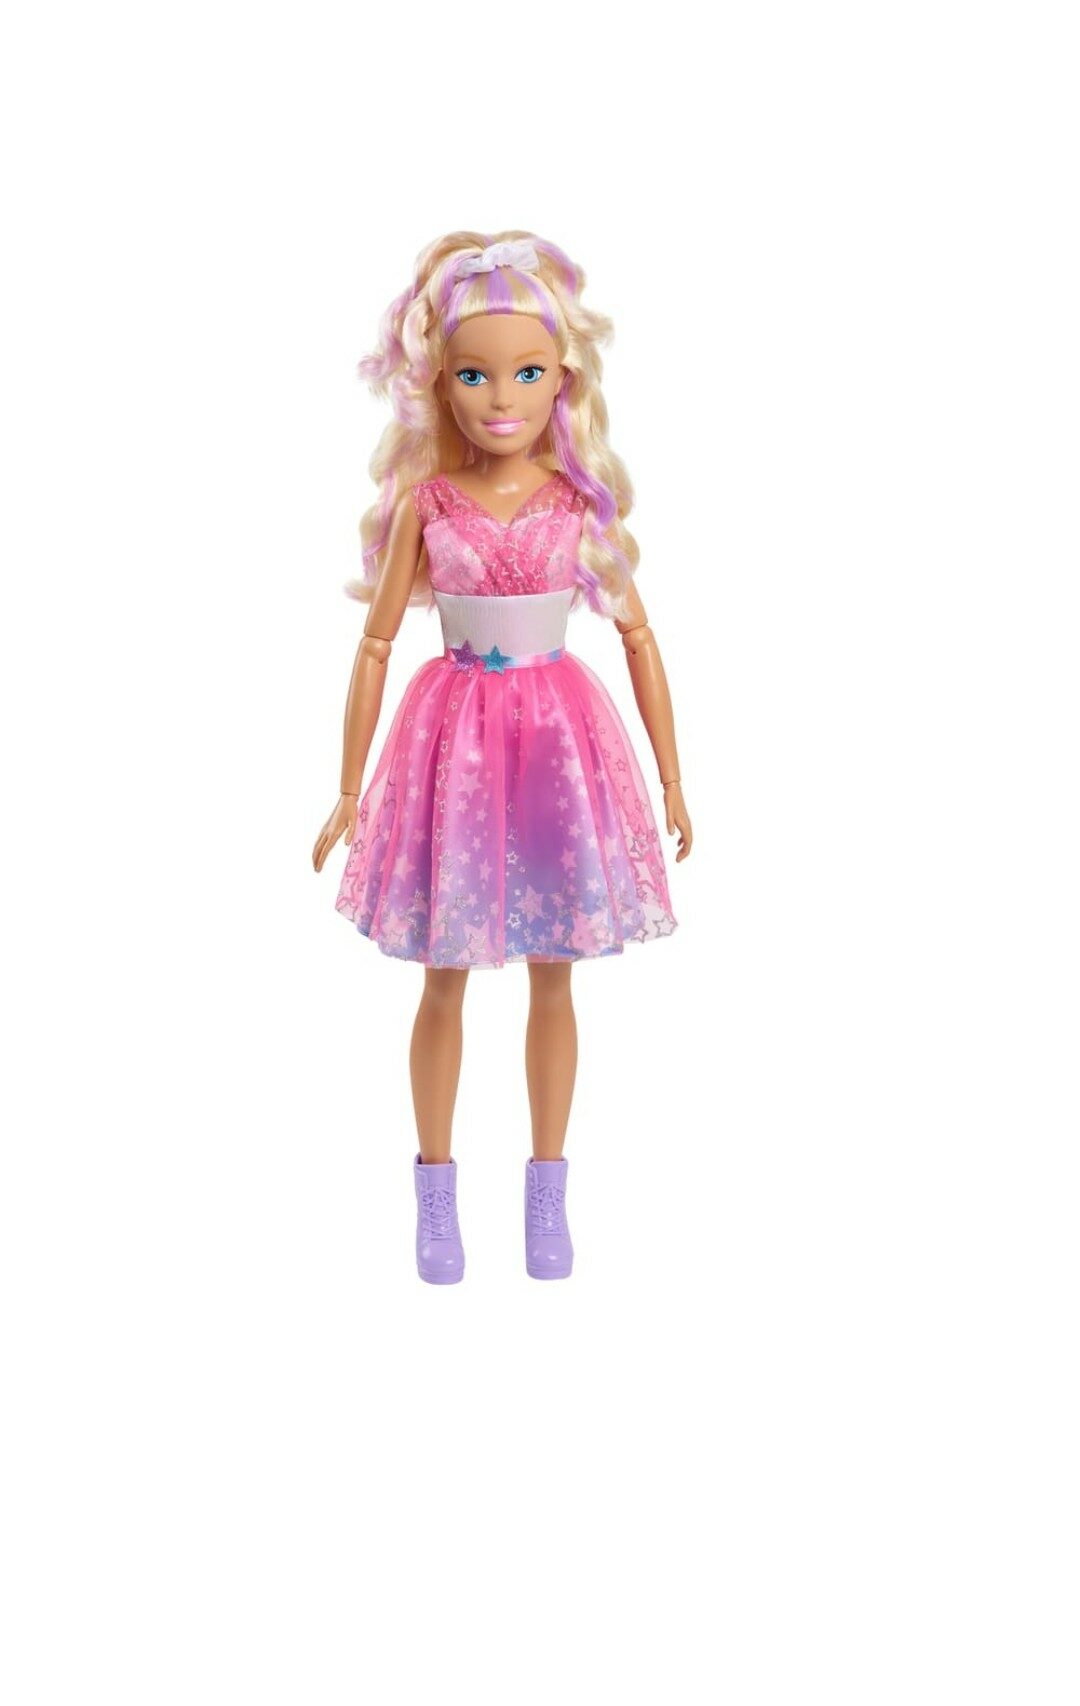 Canadian Tire] Child size dolls (Barbie, Ariel) on clearance ymmv